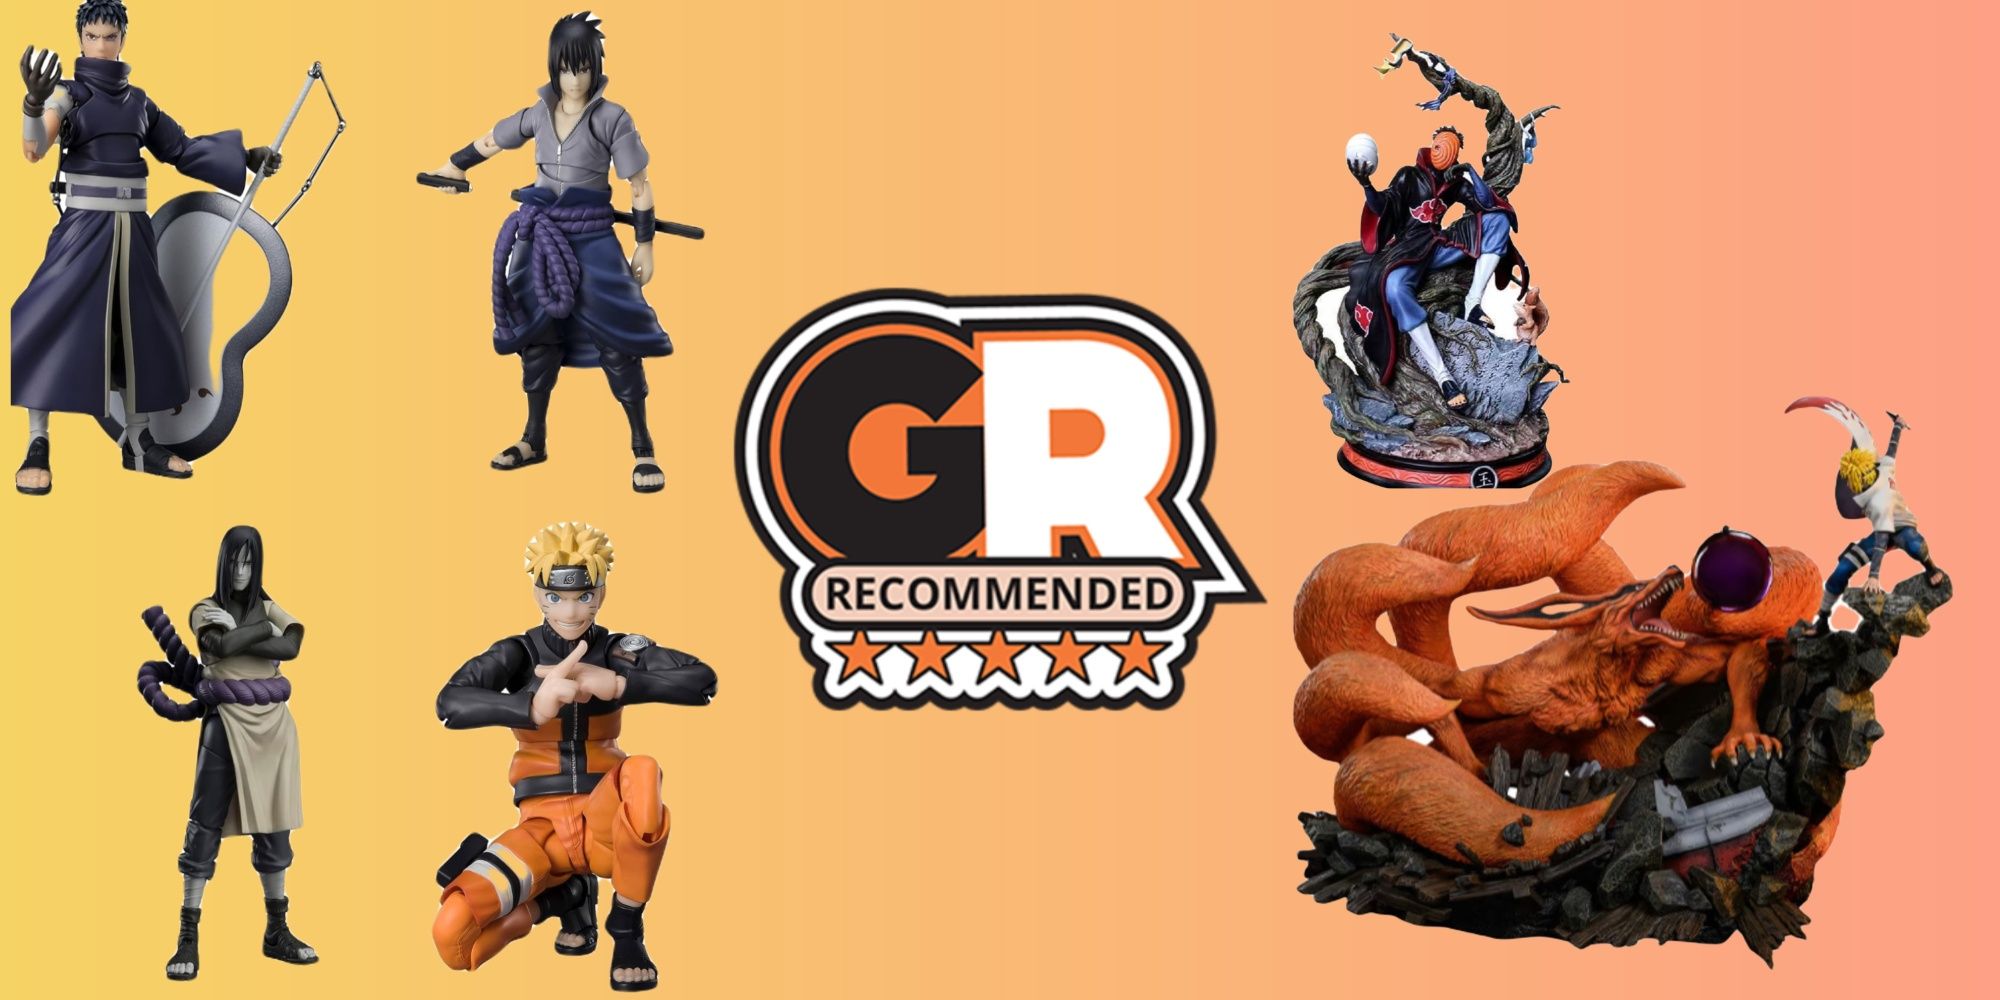 Figurine MINIX Manga: Naruto - Naruto New | Tips for original gifts